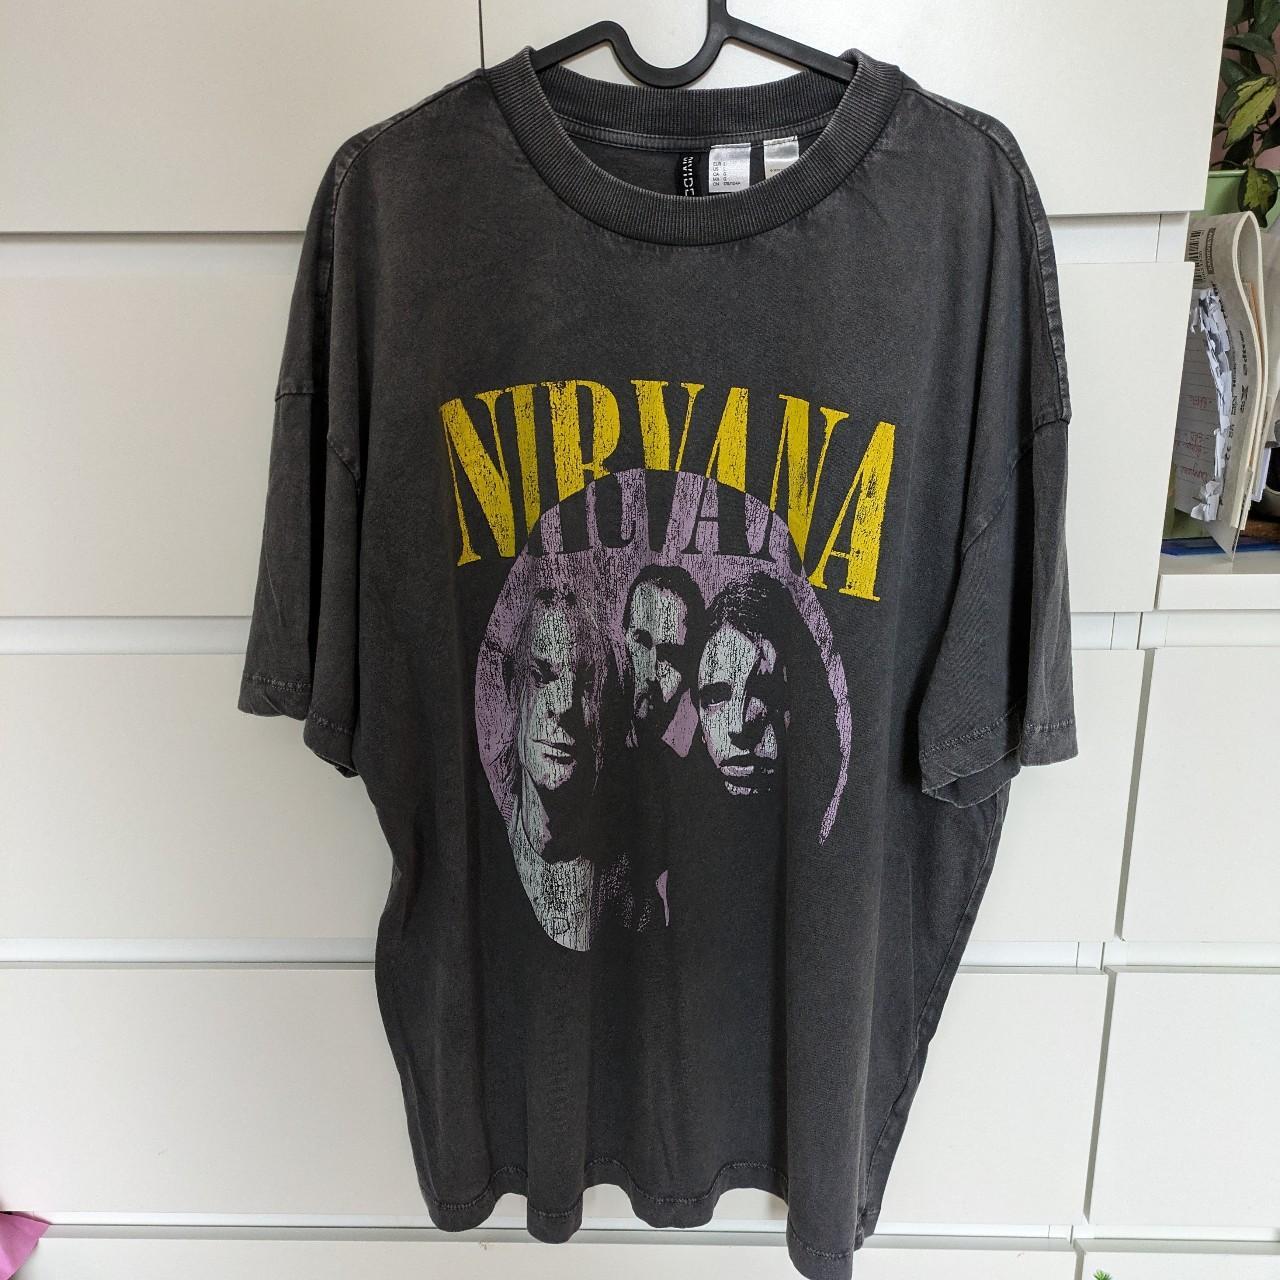 H&M nirvana band t-shirt in acid wash grey. Cool... - Depop